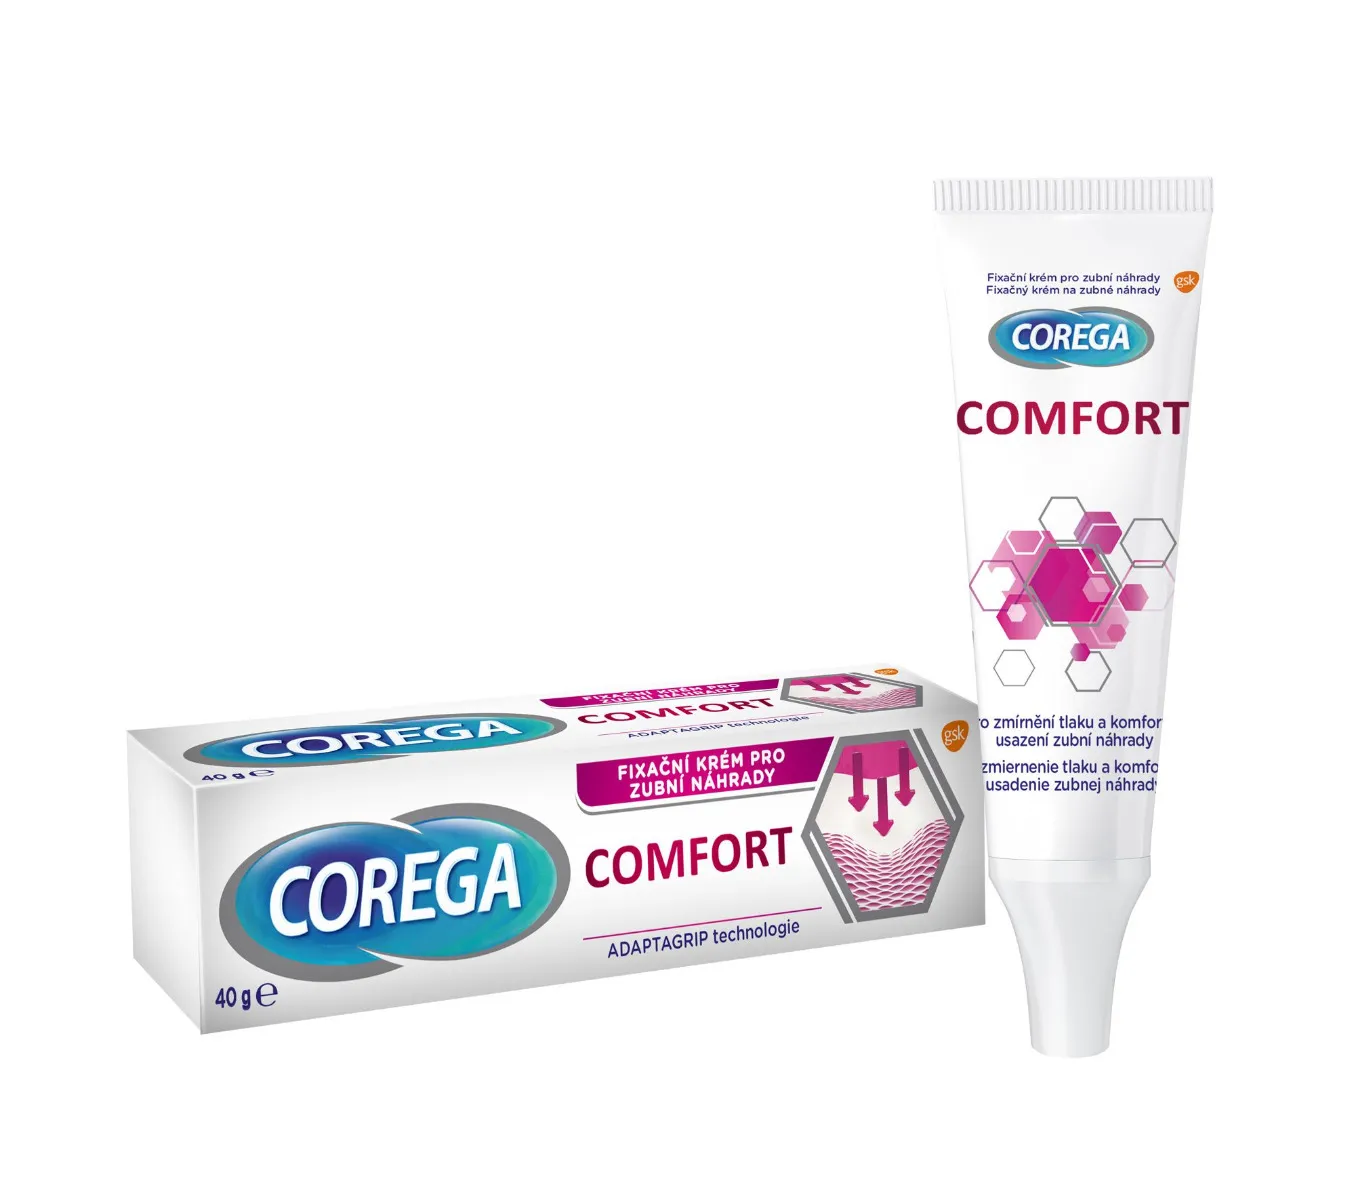 Corega Comfort